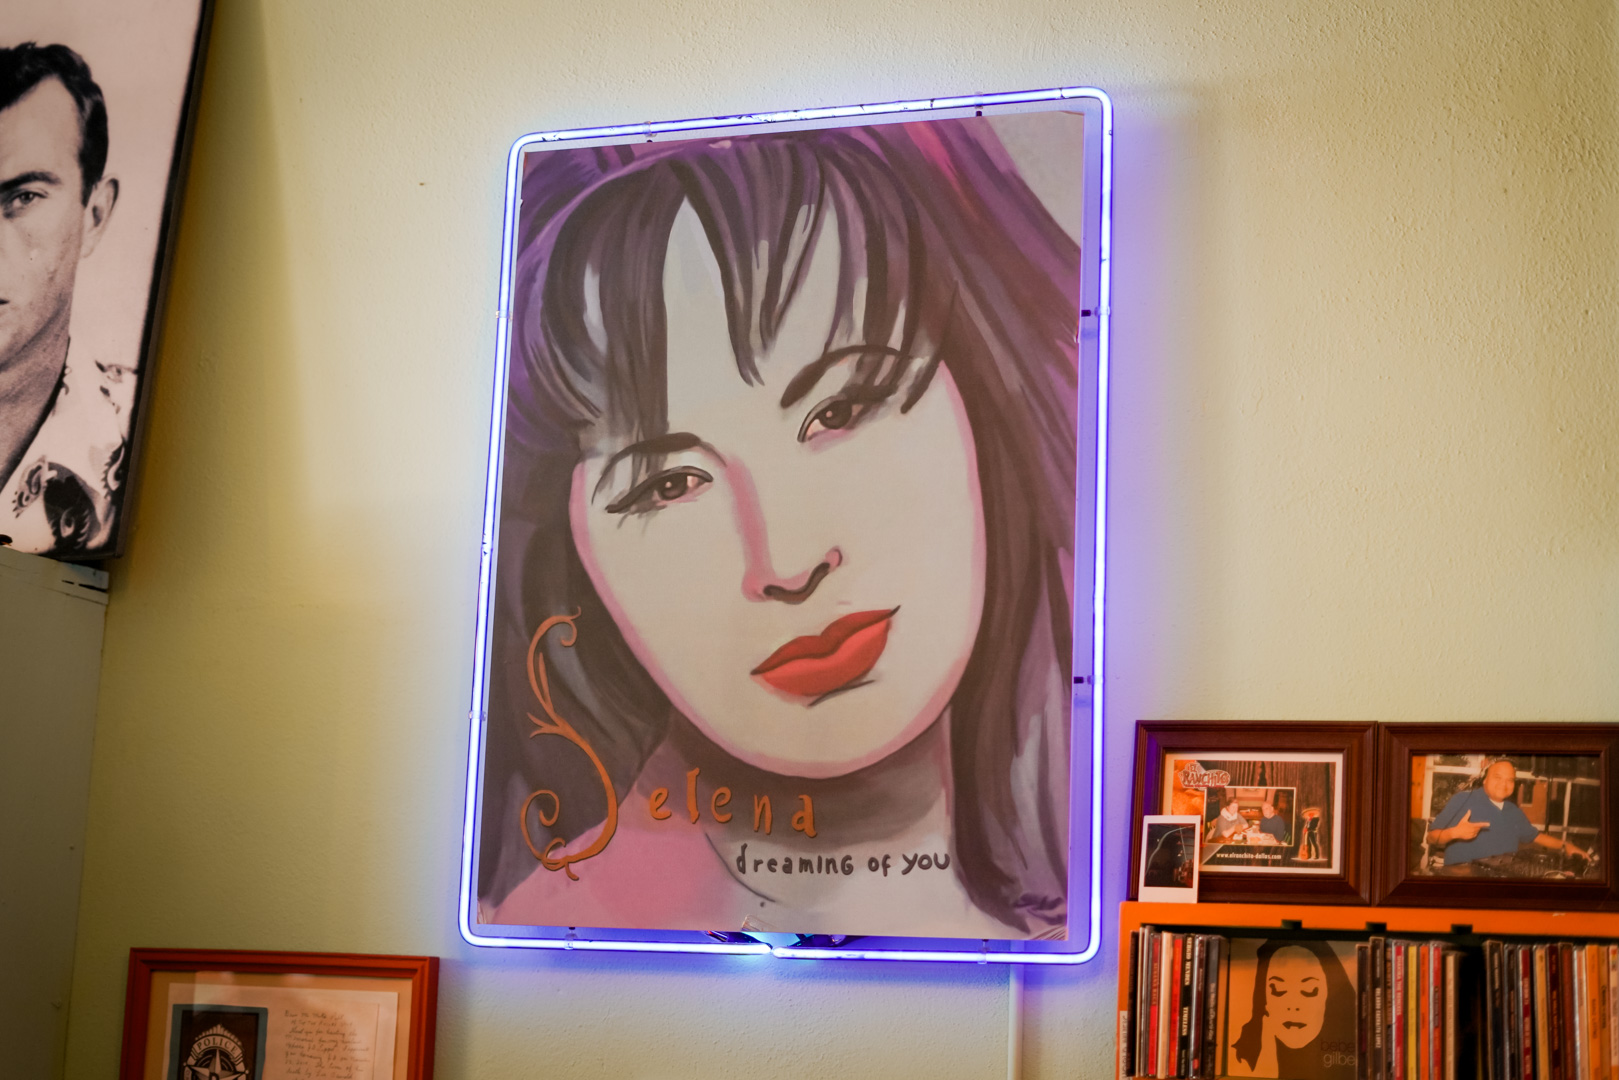 A glowing portrait of Selena